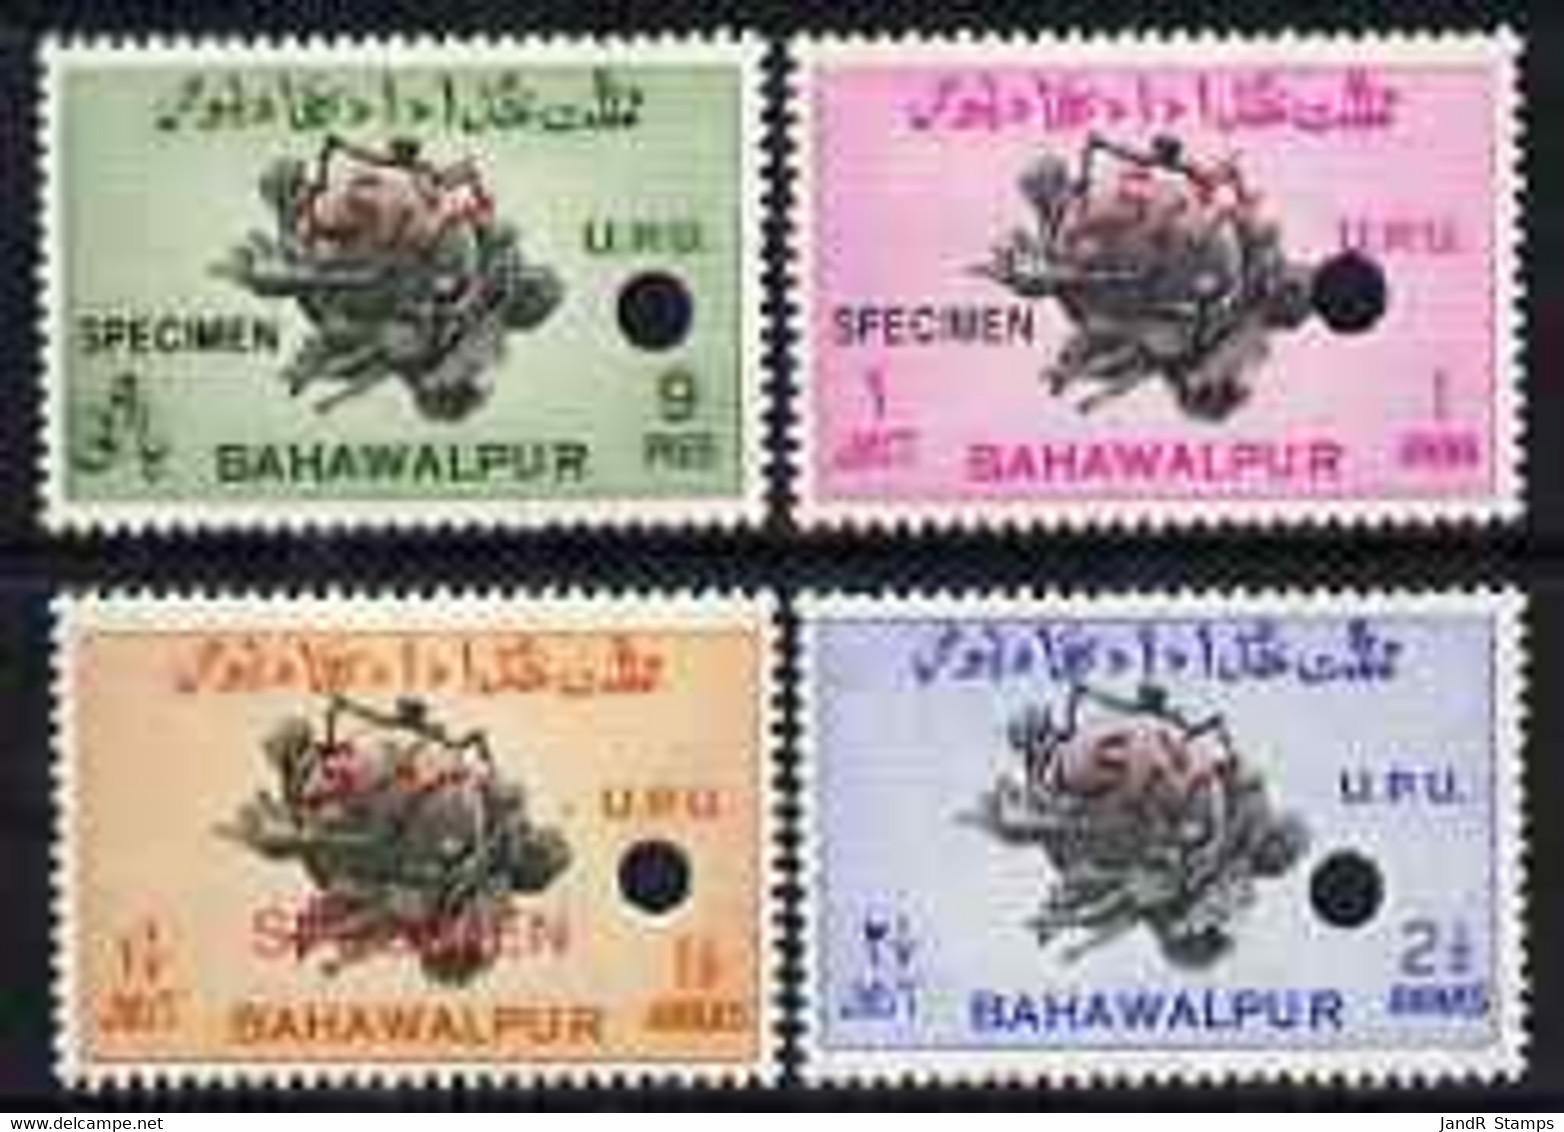 Bahawalpur 1949 KG6 75th Anniv Of Universal Postal Union Service Set Opt'd SPECIMEN With Security Punch Hole - Bahawalpur